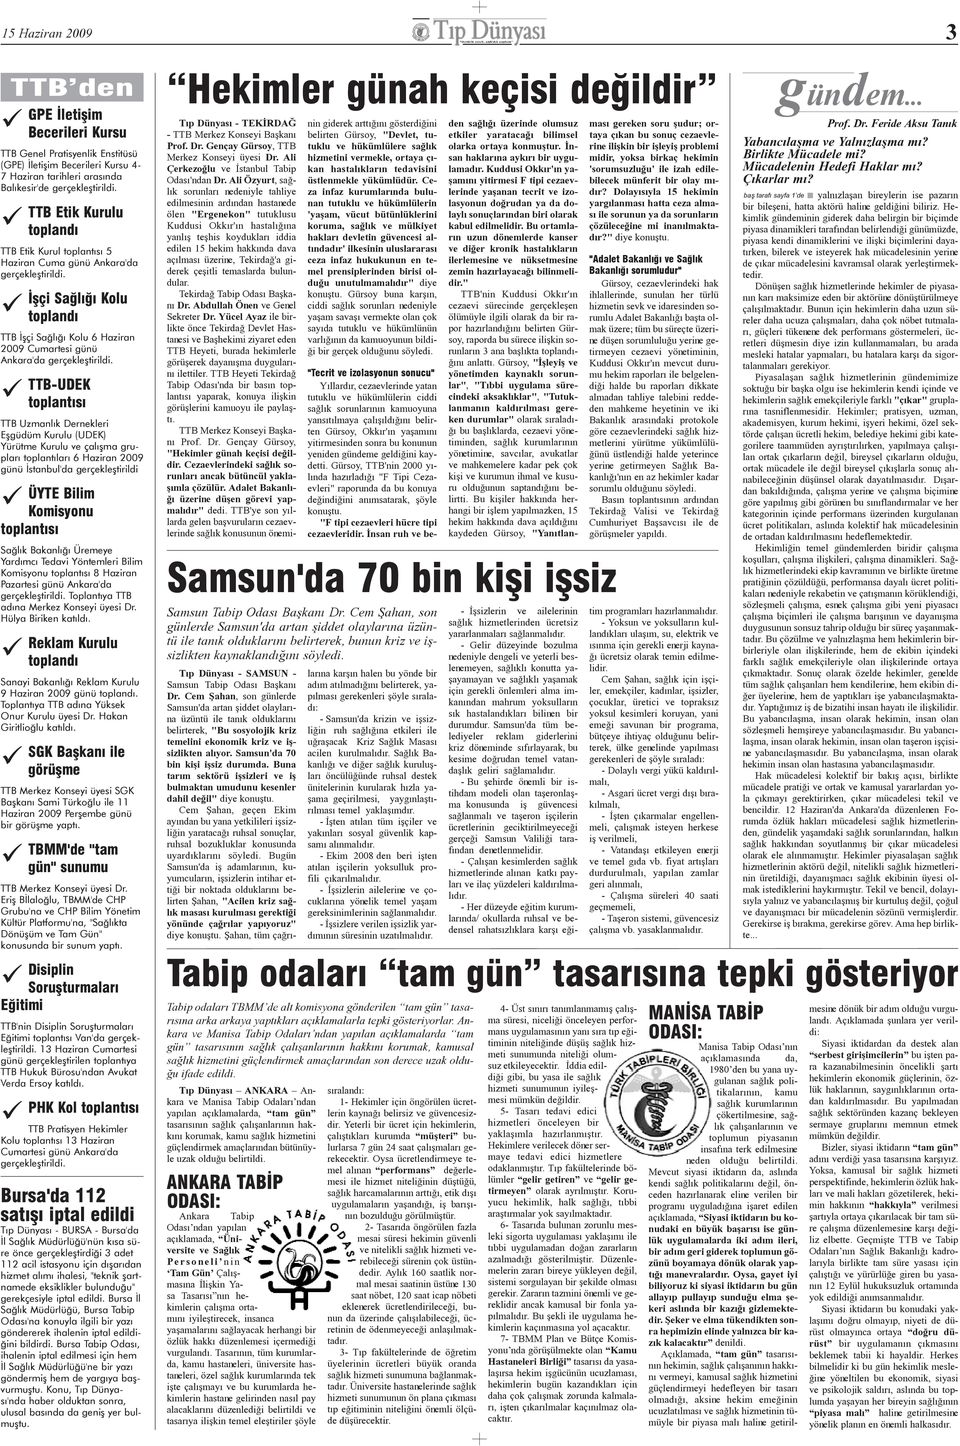 Ýþçi Saðlýðý Kolu toplandý TTB Ýþçi Saðlýðý Kolu 6 Haziran 2009 Cumartesi günü Ankara'da gerçekleþtirildi.